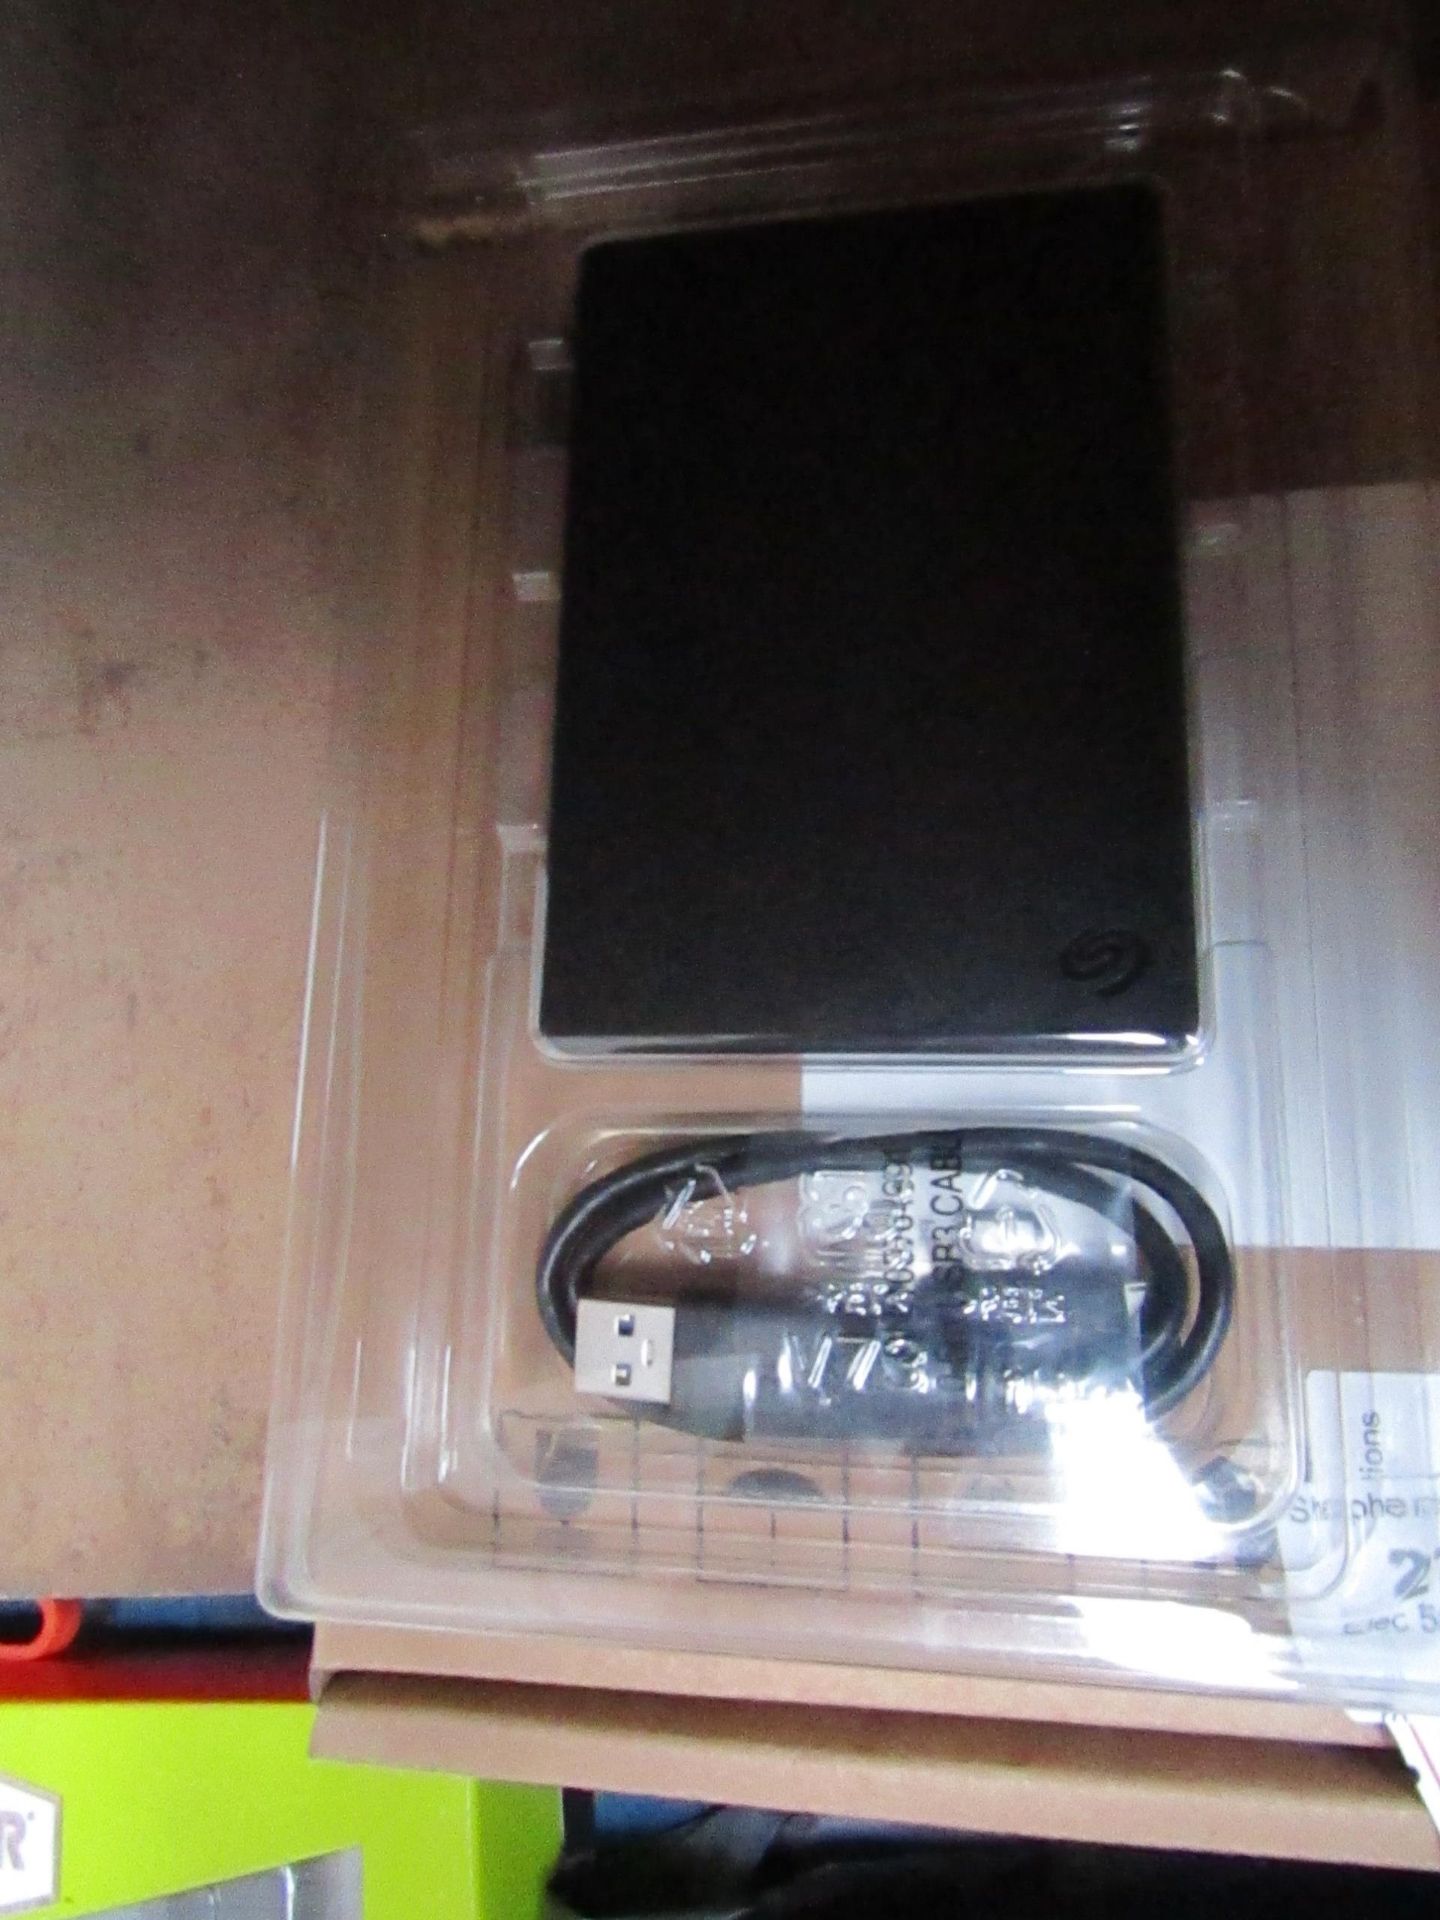 Seagate 2TB Portable Drive, untested and boxed.